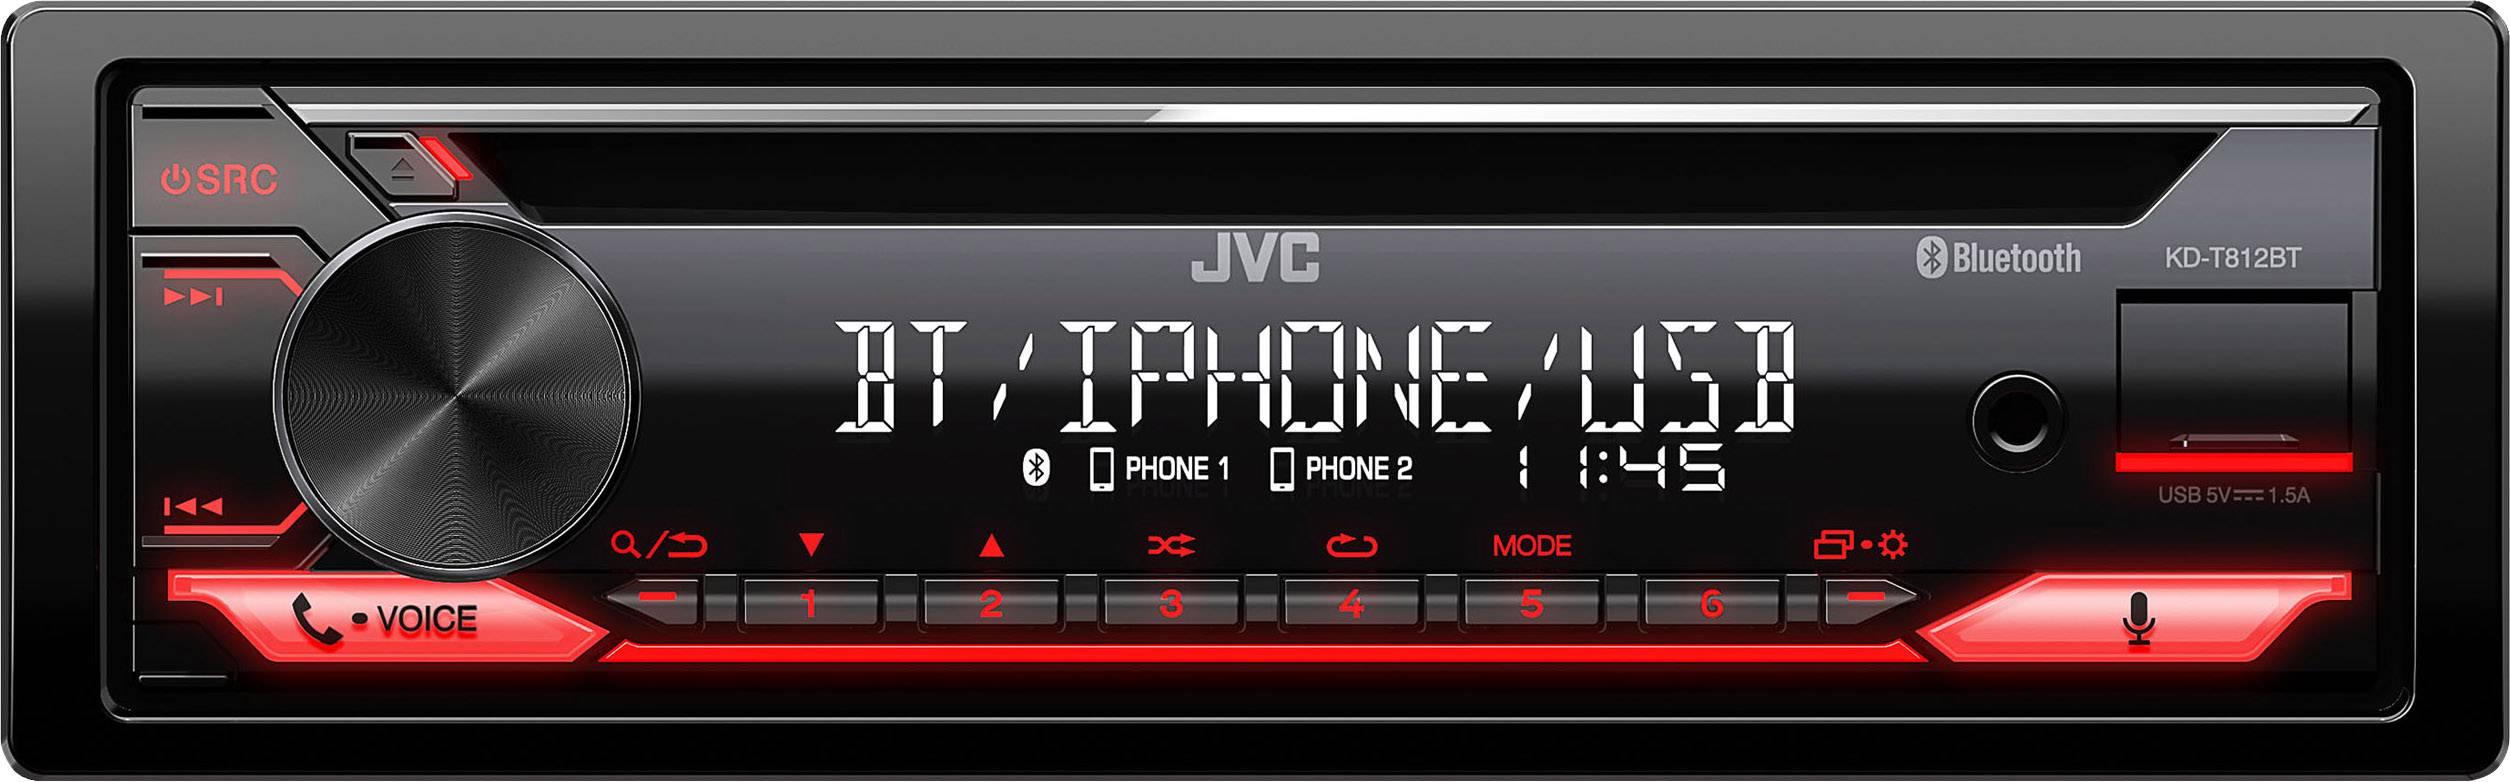 Nuevo Estéreo Bluetooth USB MP3 de CD JVC Spotify Iphone Alexa Ready KD-T812BT 